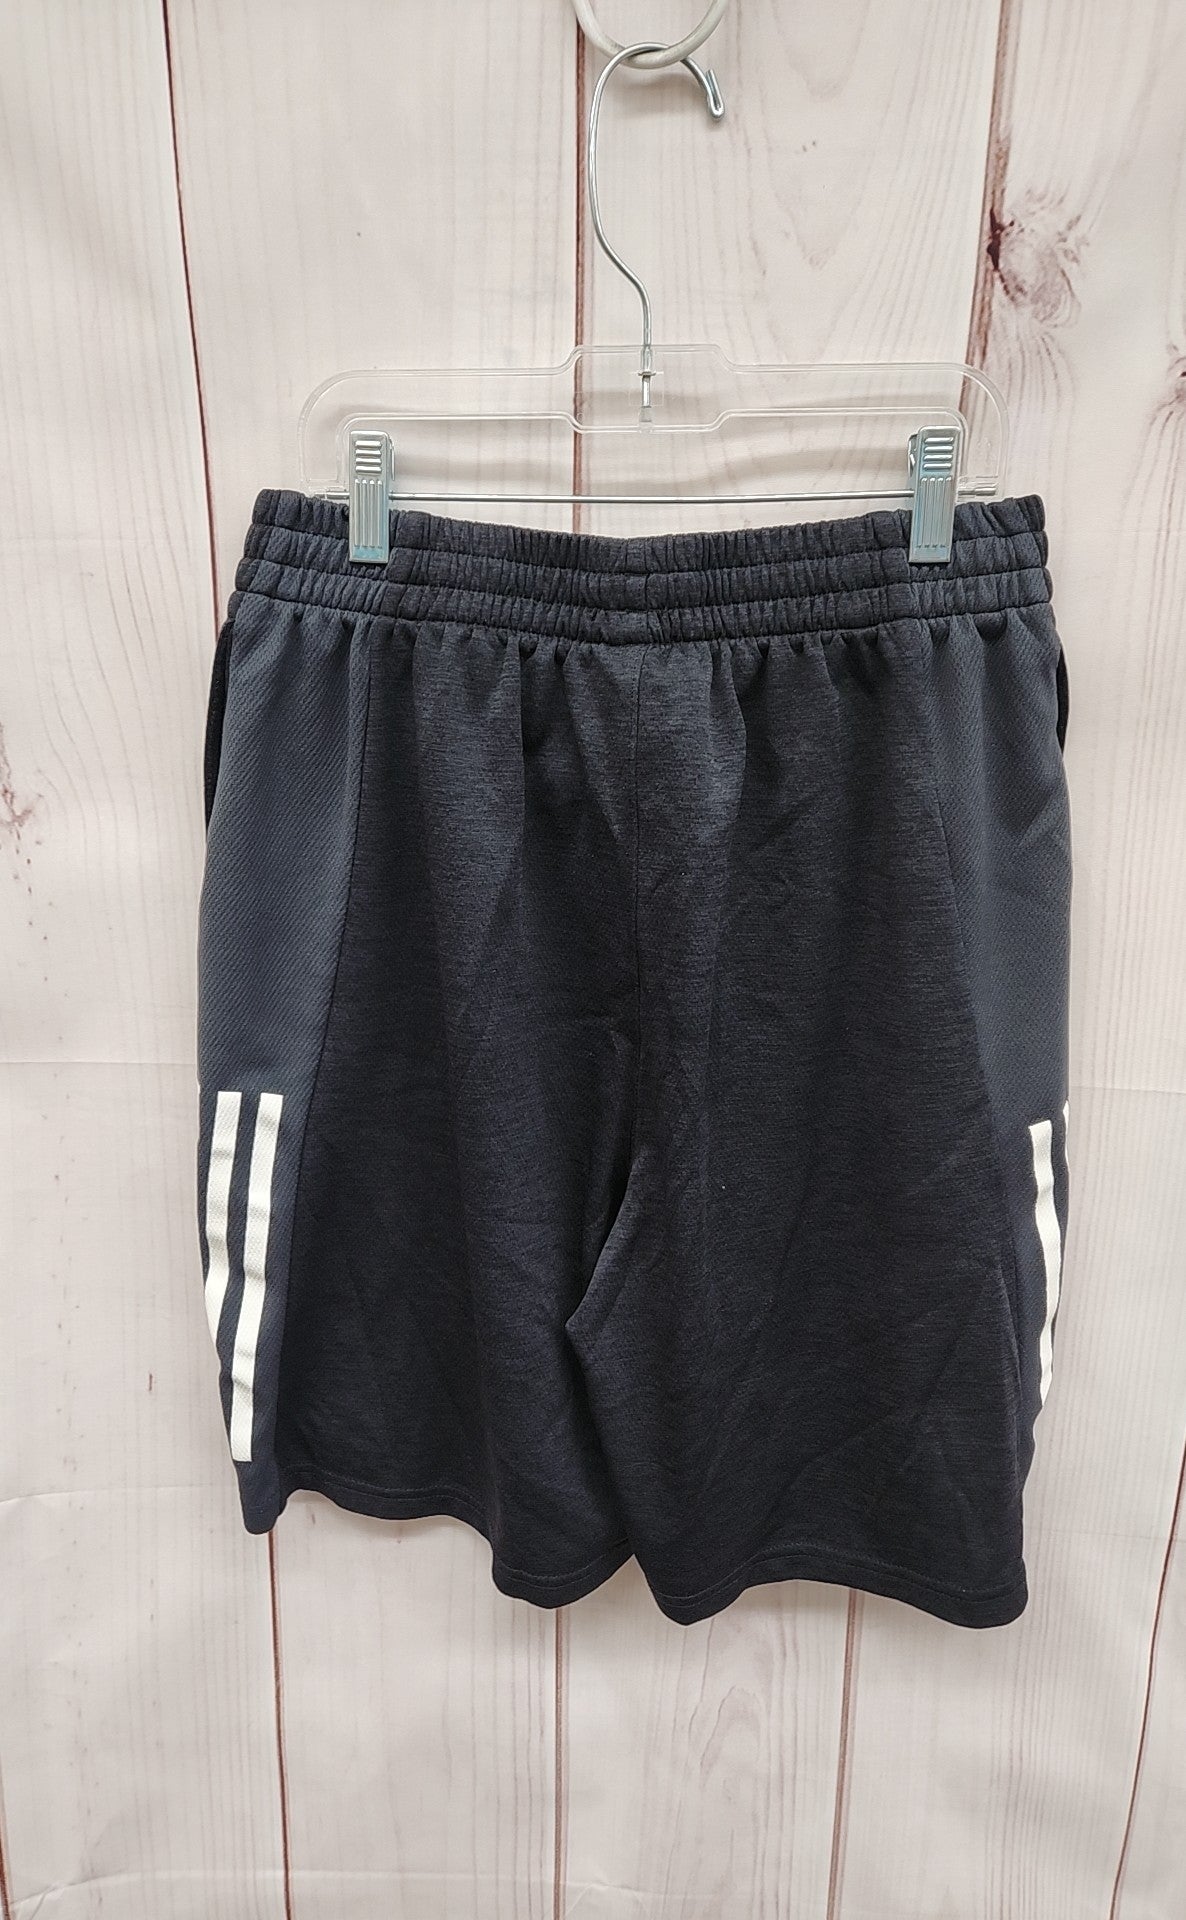 Adidas Boy's Size 18/20 Black Shorts